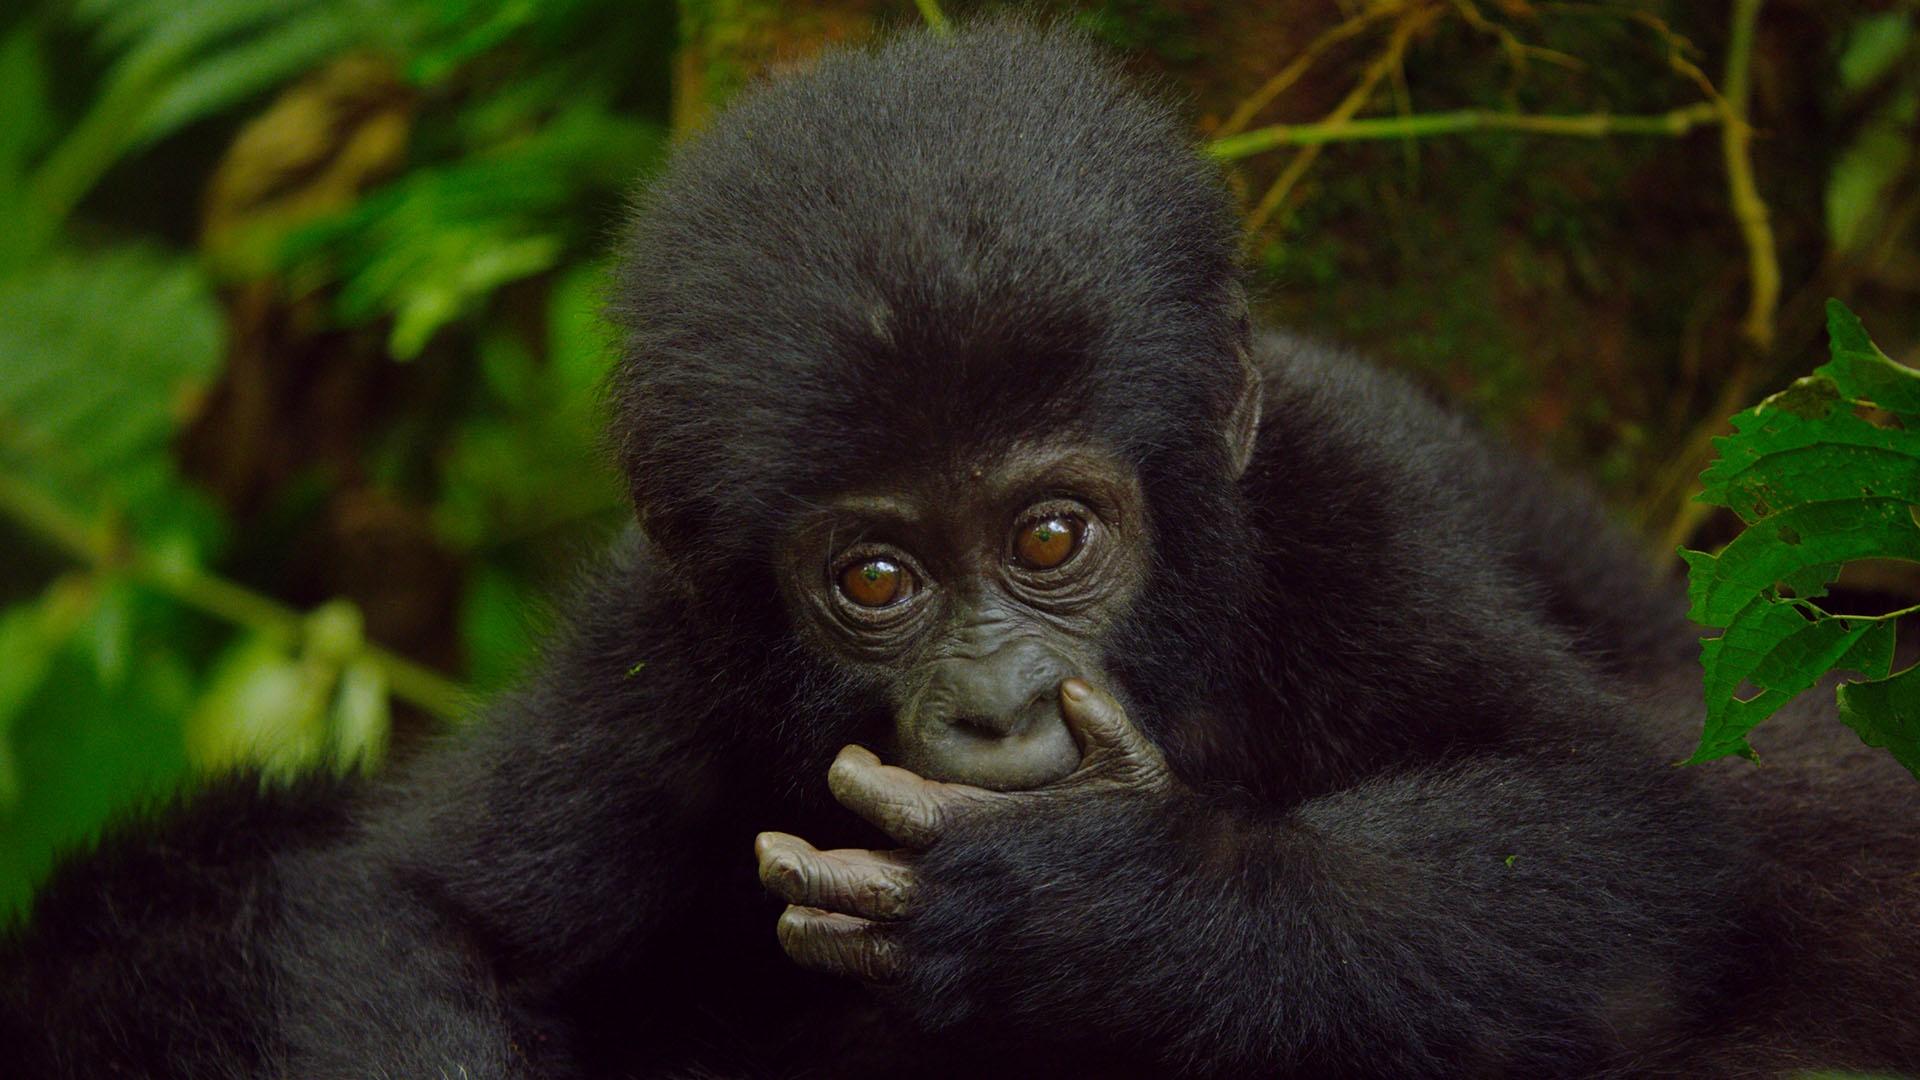 Closeup image of baby mountain gorilla